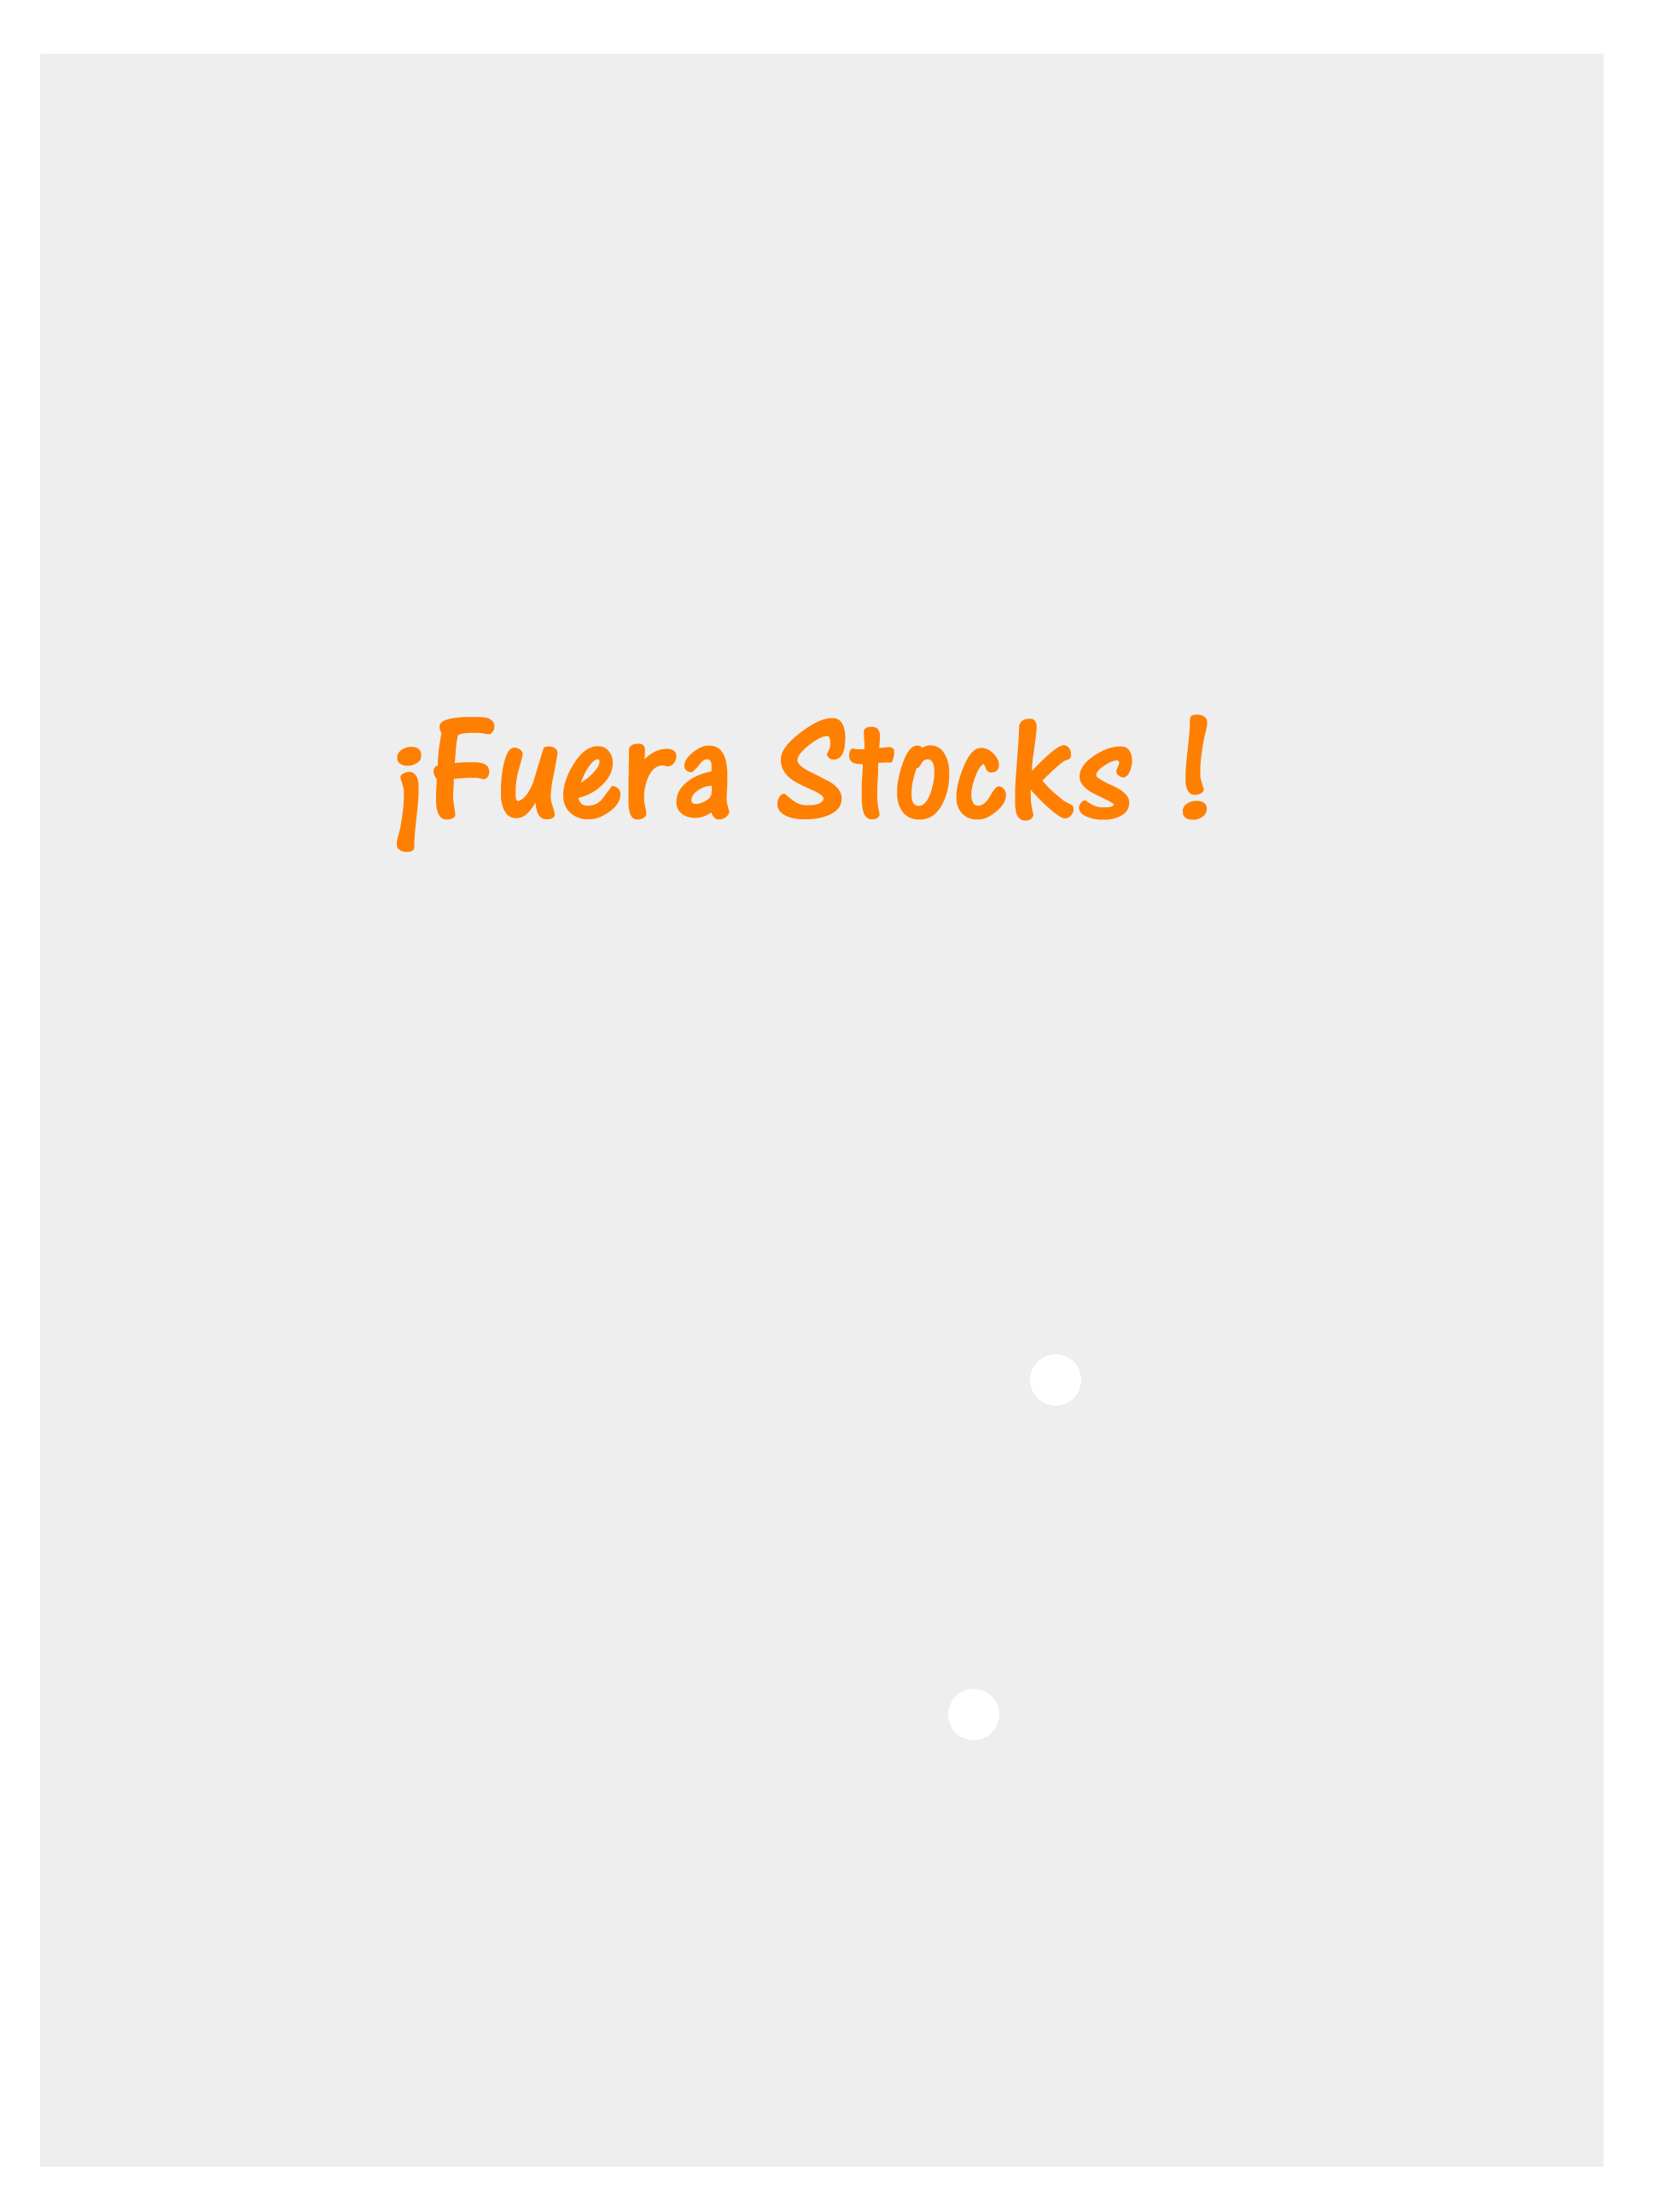 stocks fuera 